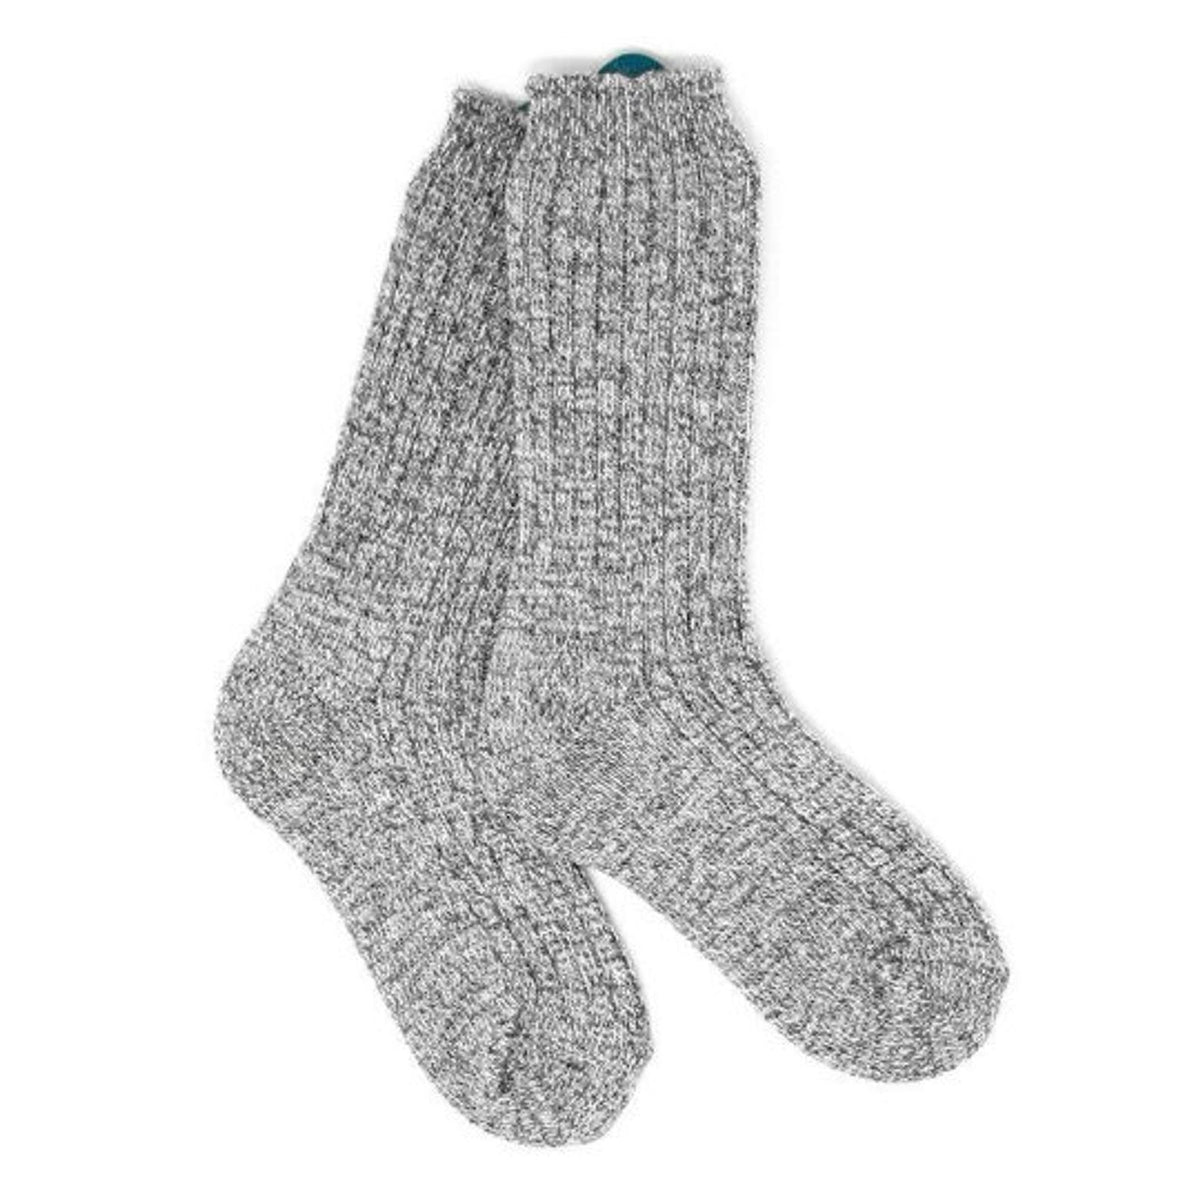 WASTWIST-Winter Warm Wool and Angora Socks, Made with Twist Merino wool and Angora Yarn